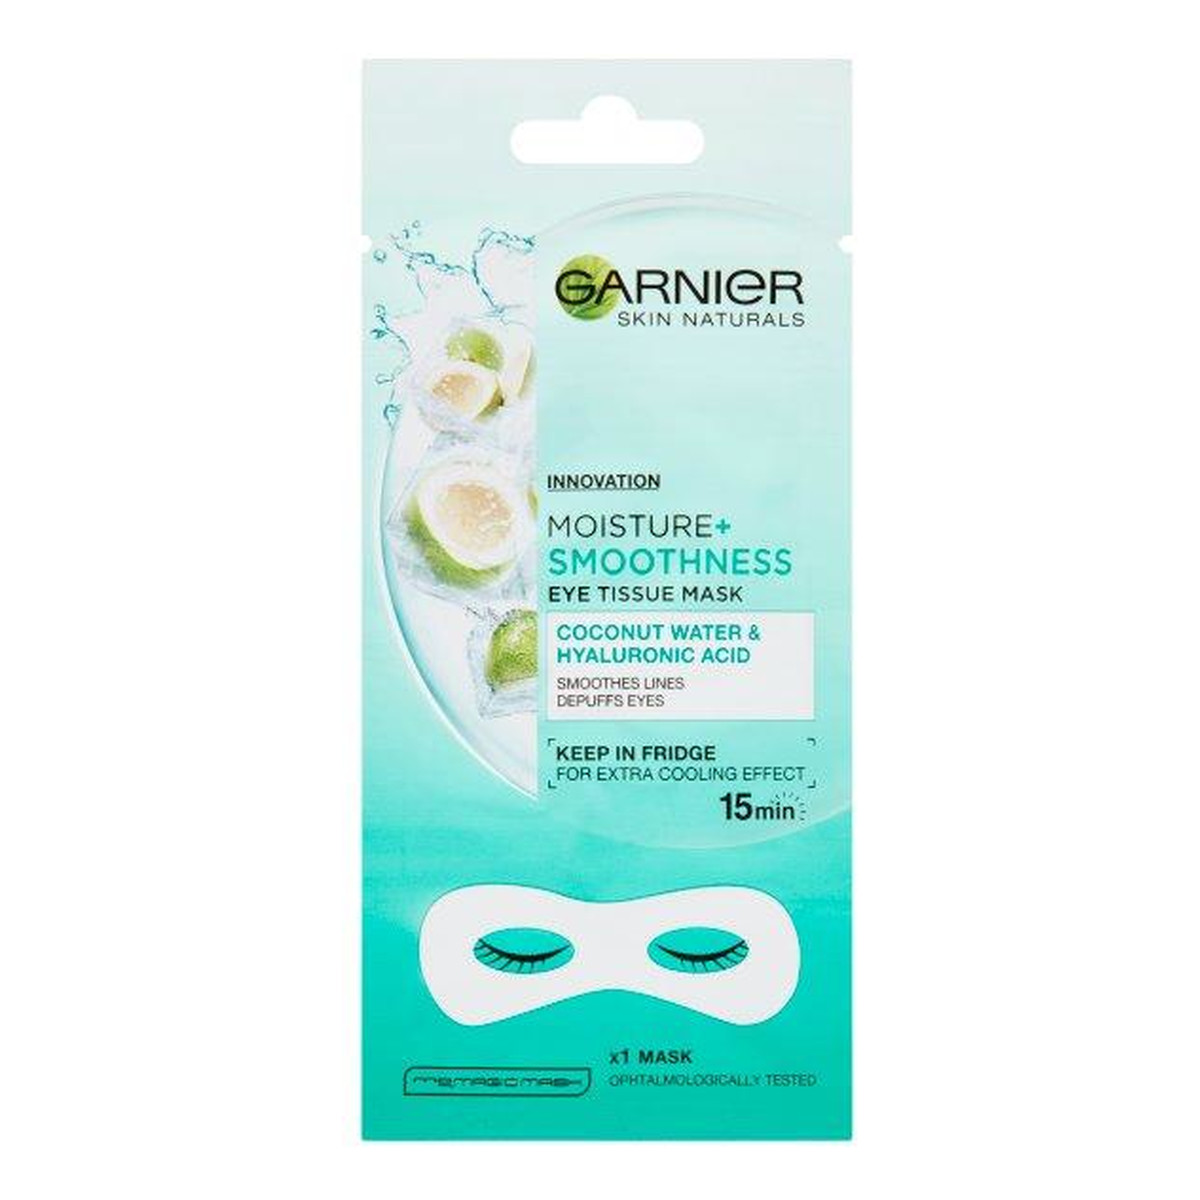 Garnier Skin Naturals Moisture+ Maska pod oczy Coconut Water & Hyaluronic Acid 6g